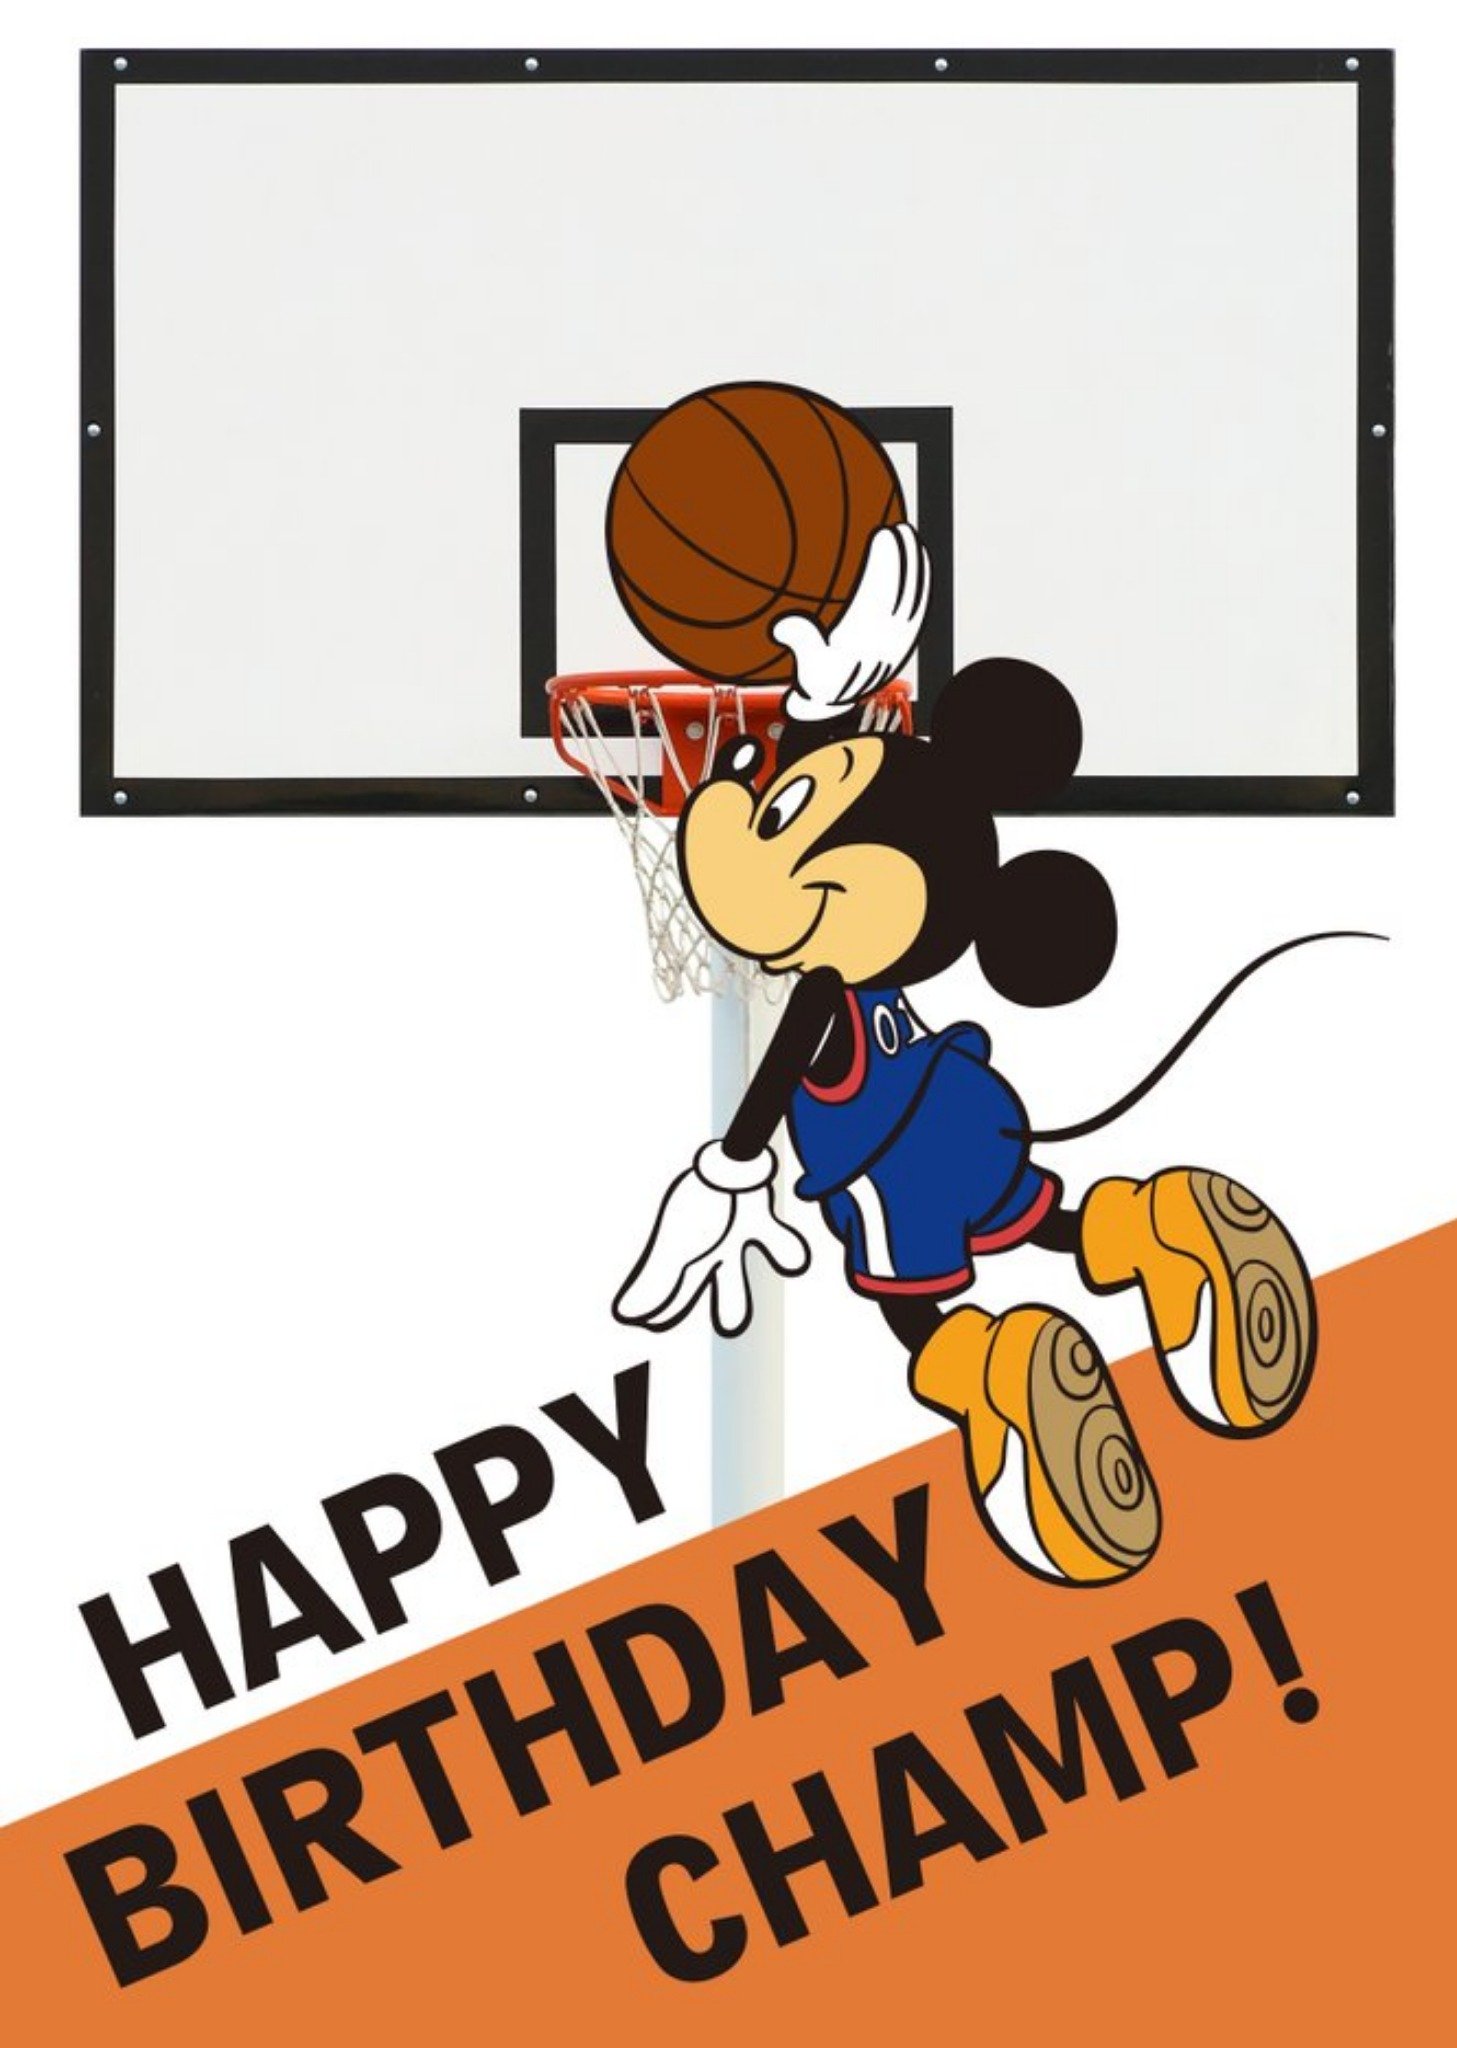 Disney Mickey Mouse Basket Ball Champ Birthday Card, Large